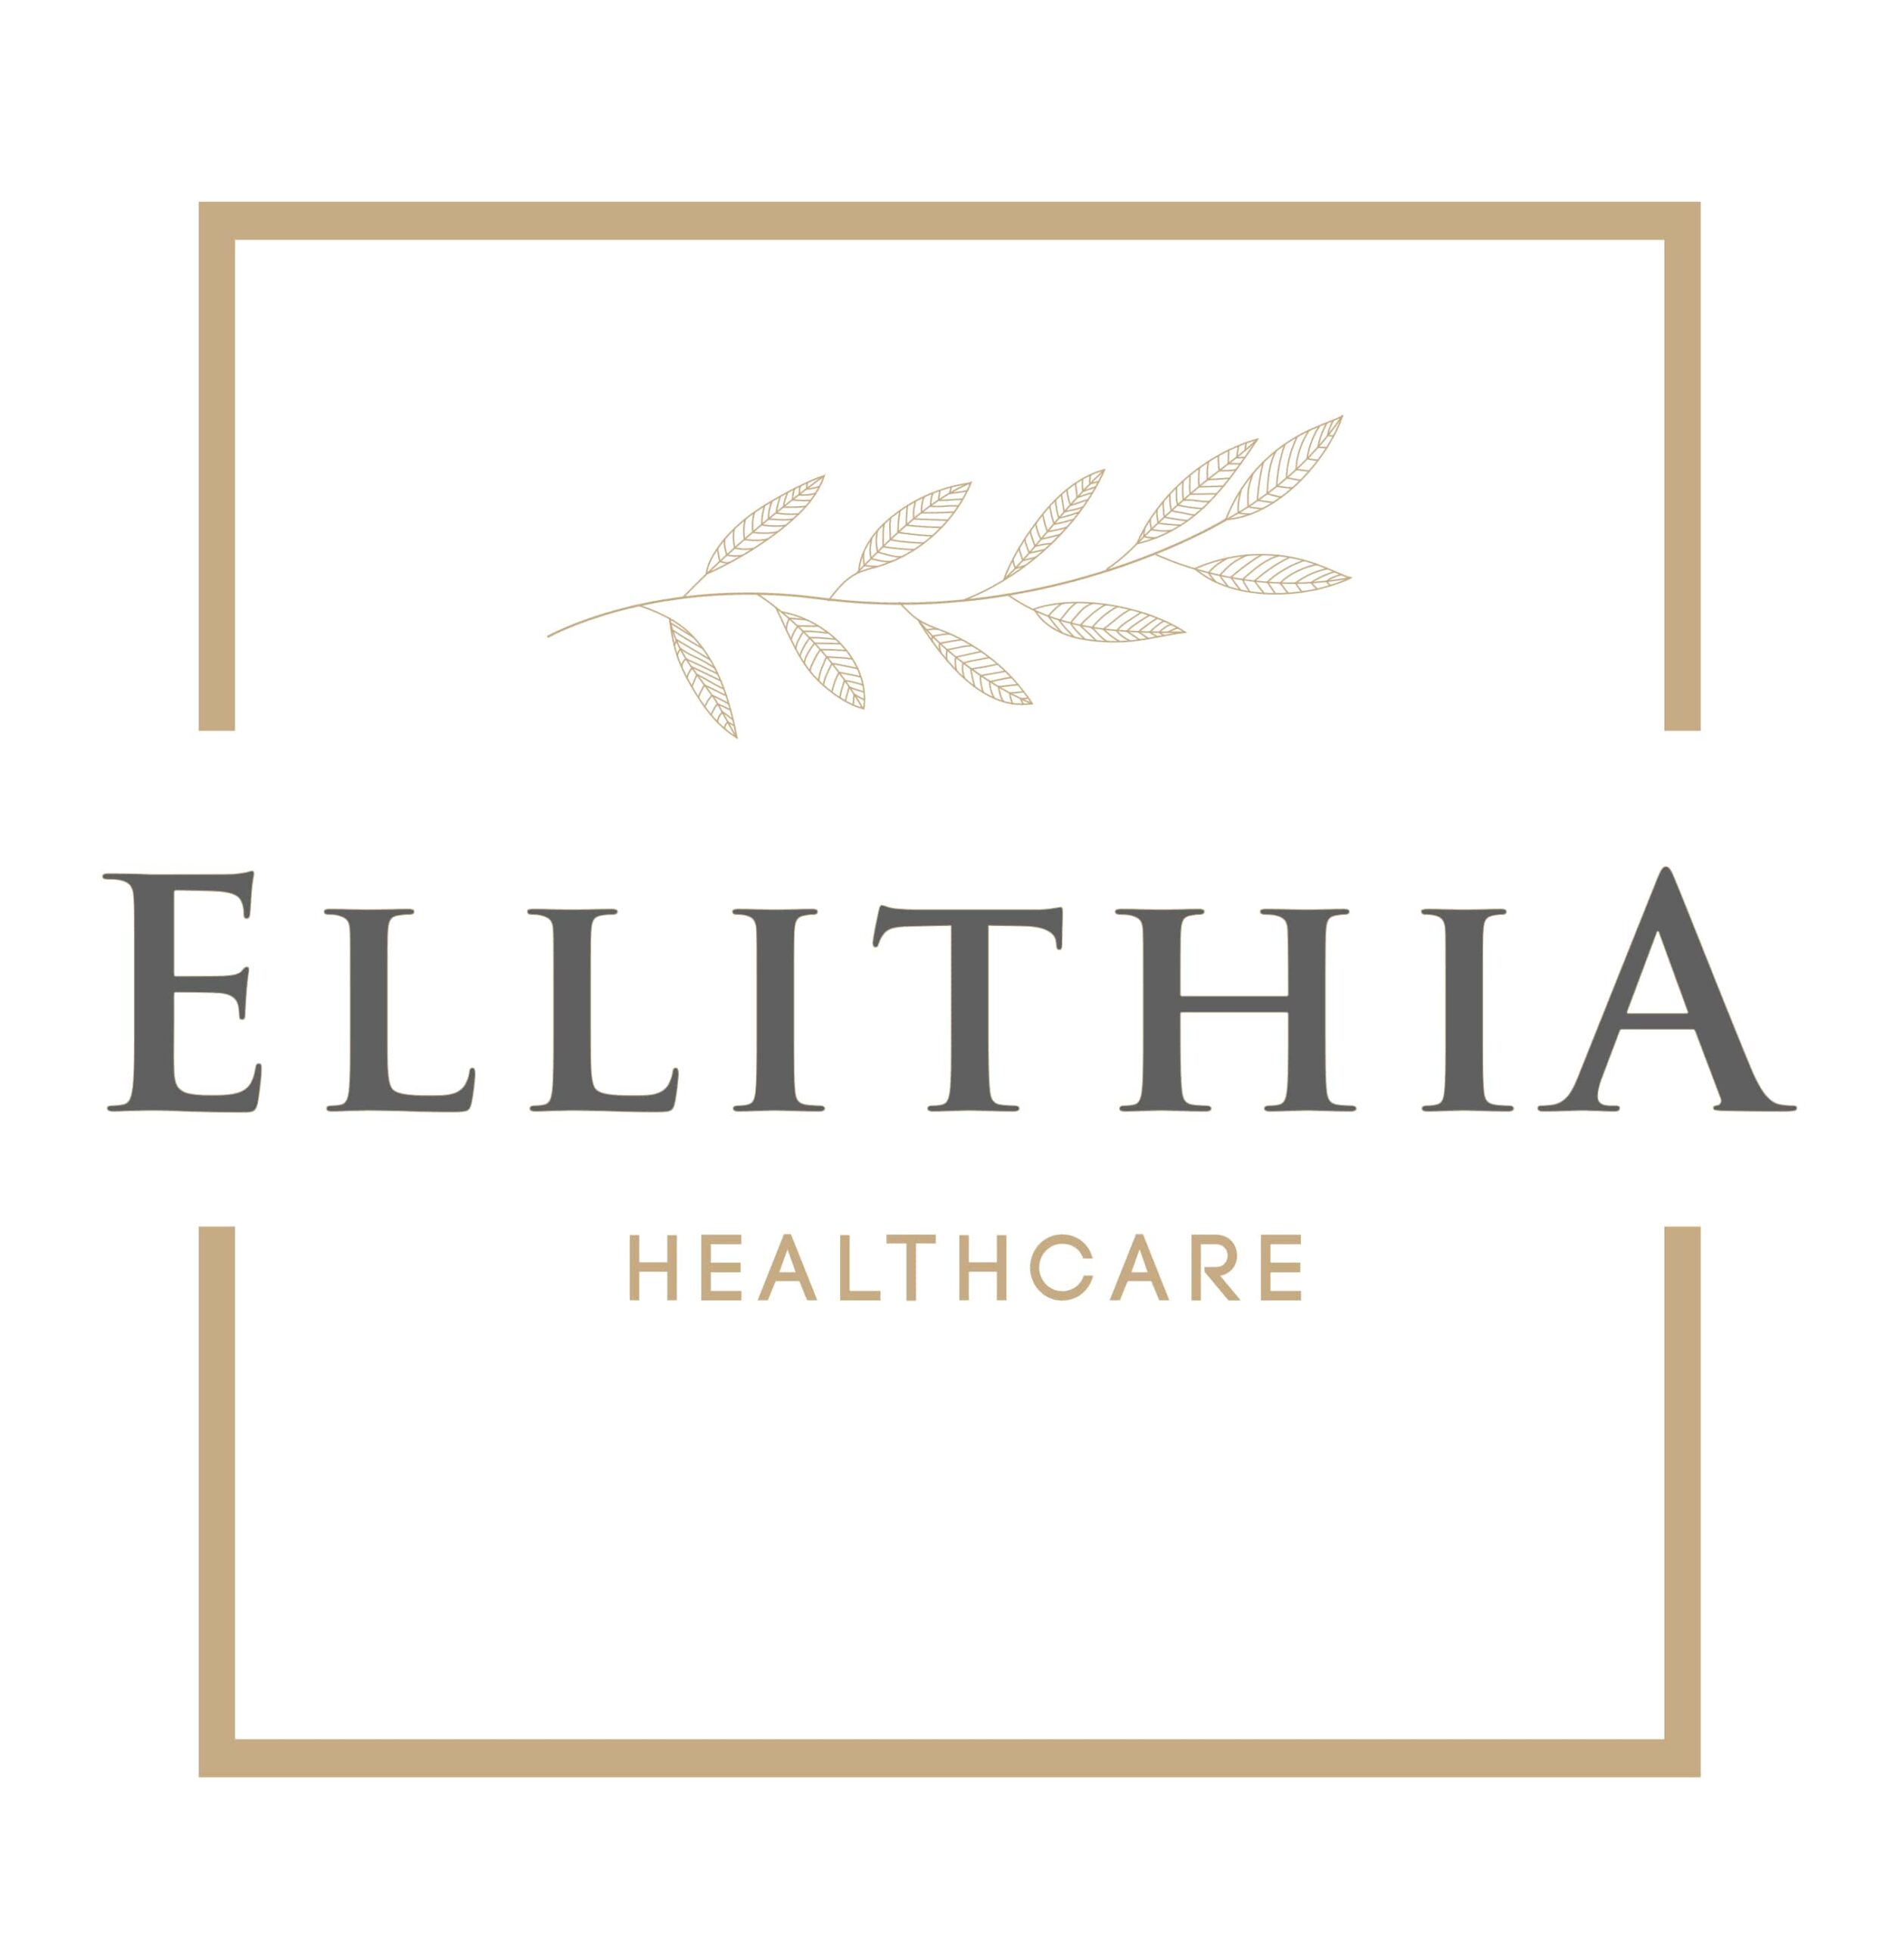 ELLIITHIA HEALTHCARE